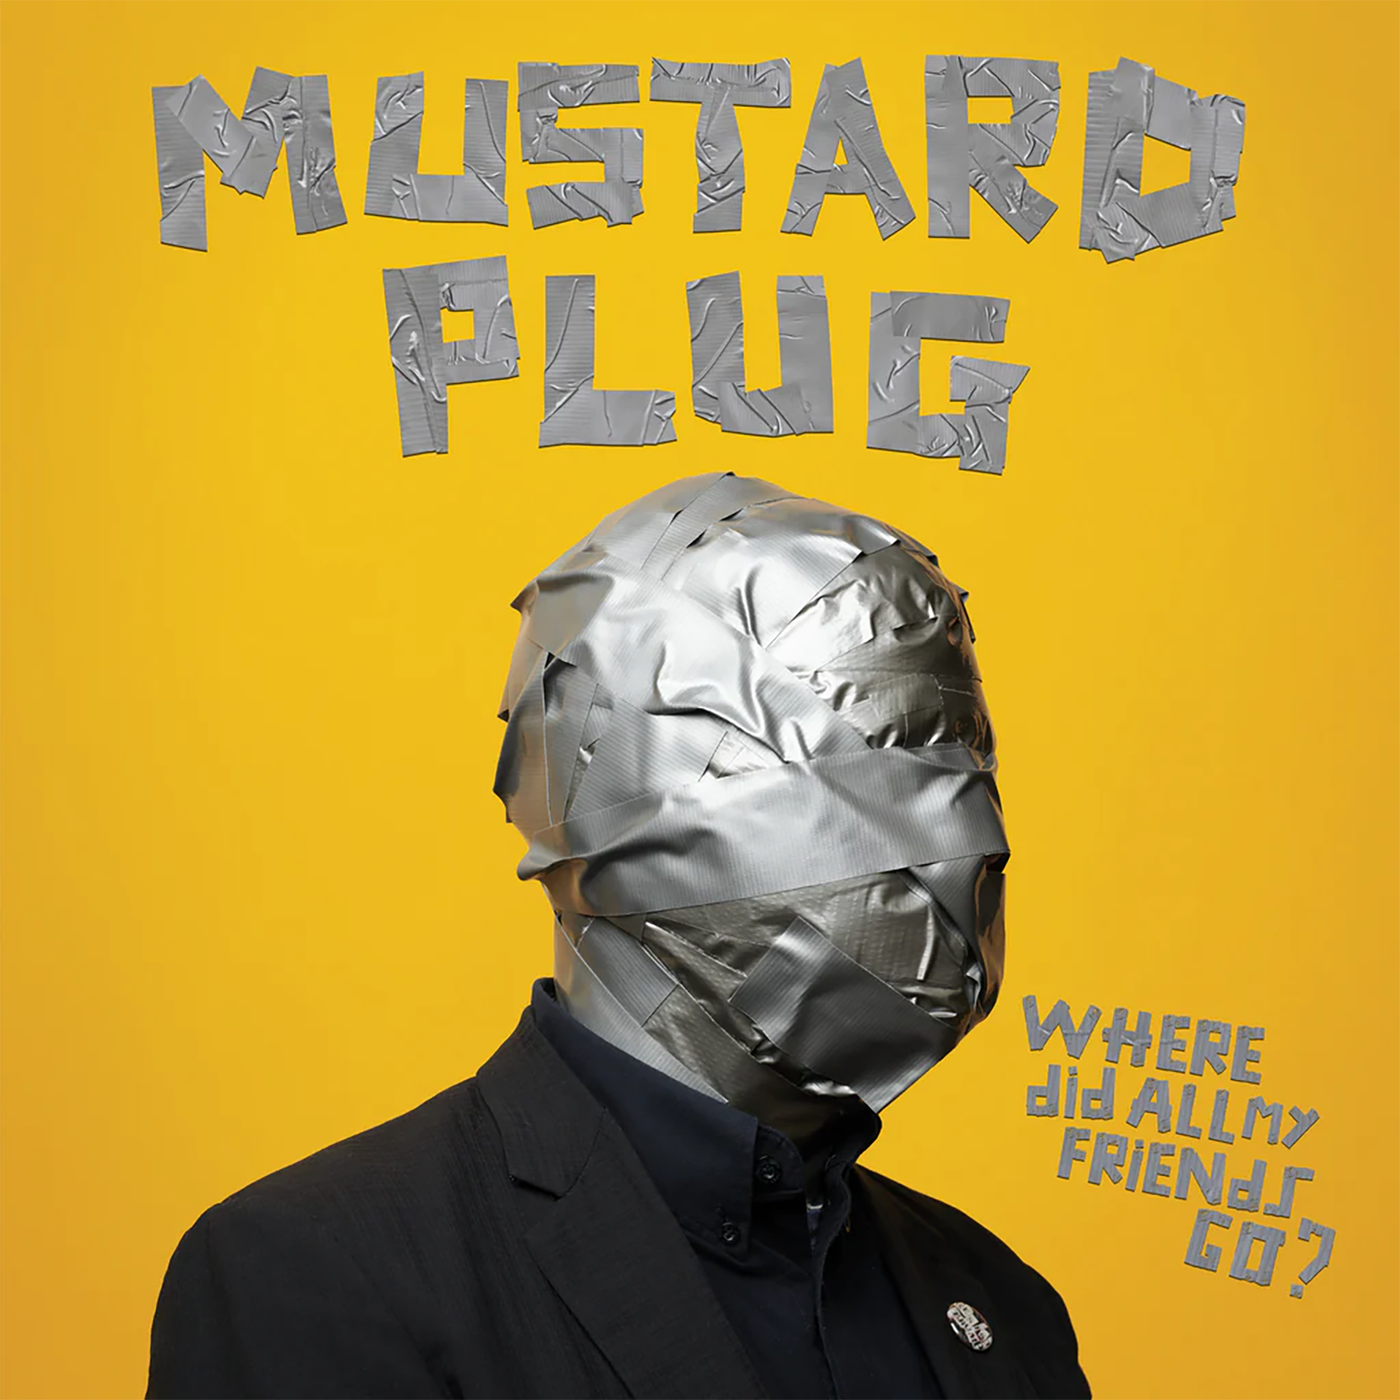 Mustard Plug - Where Did All My Friends Go? | Smartpunk Exclusive